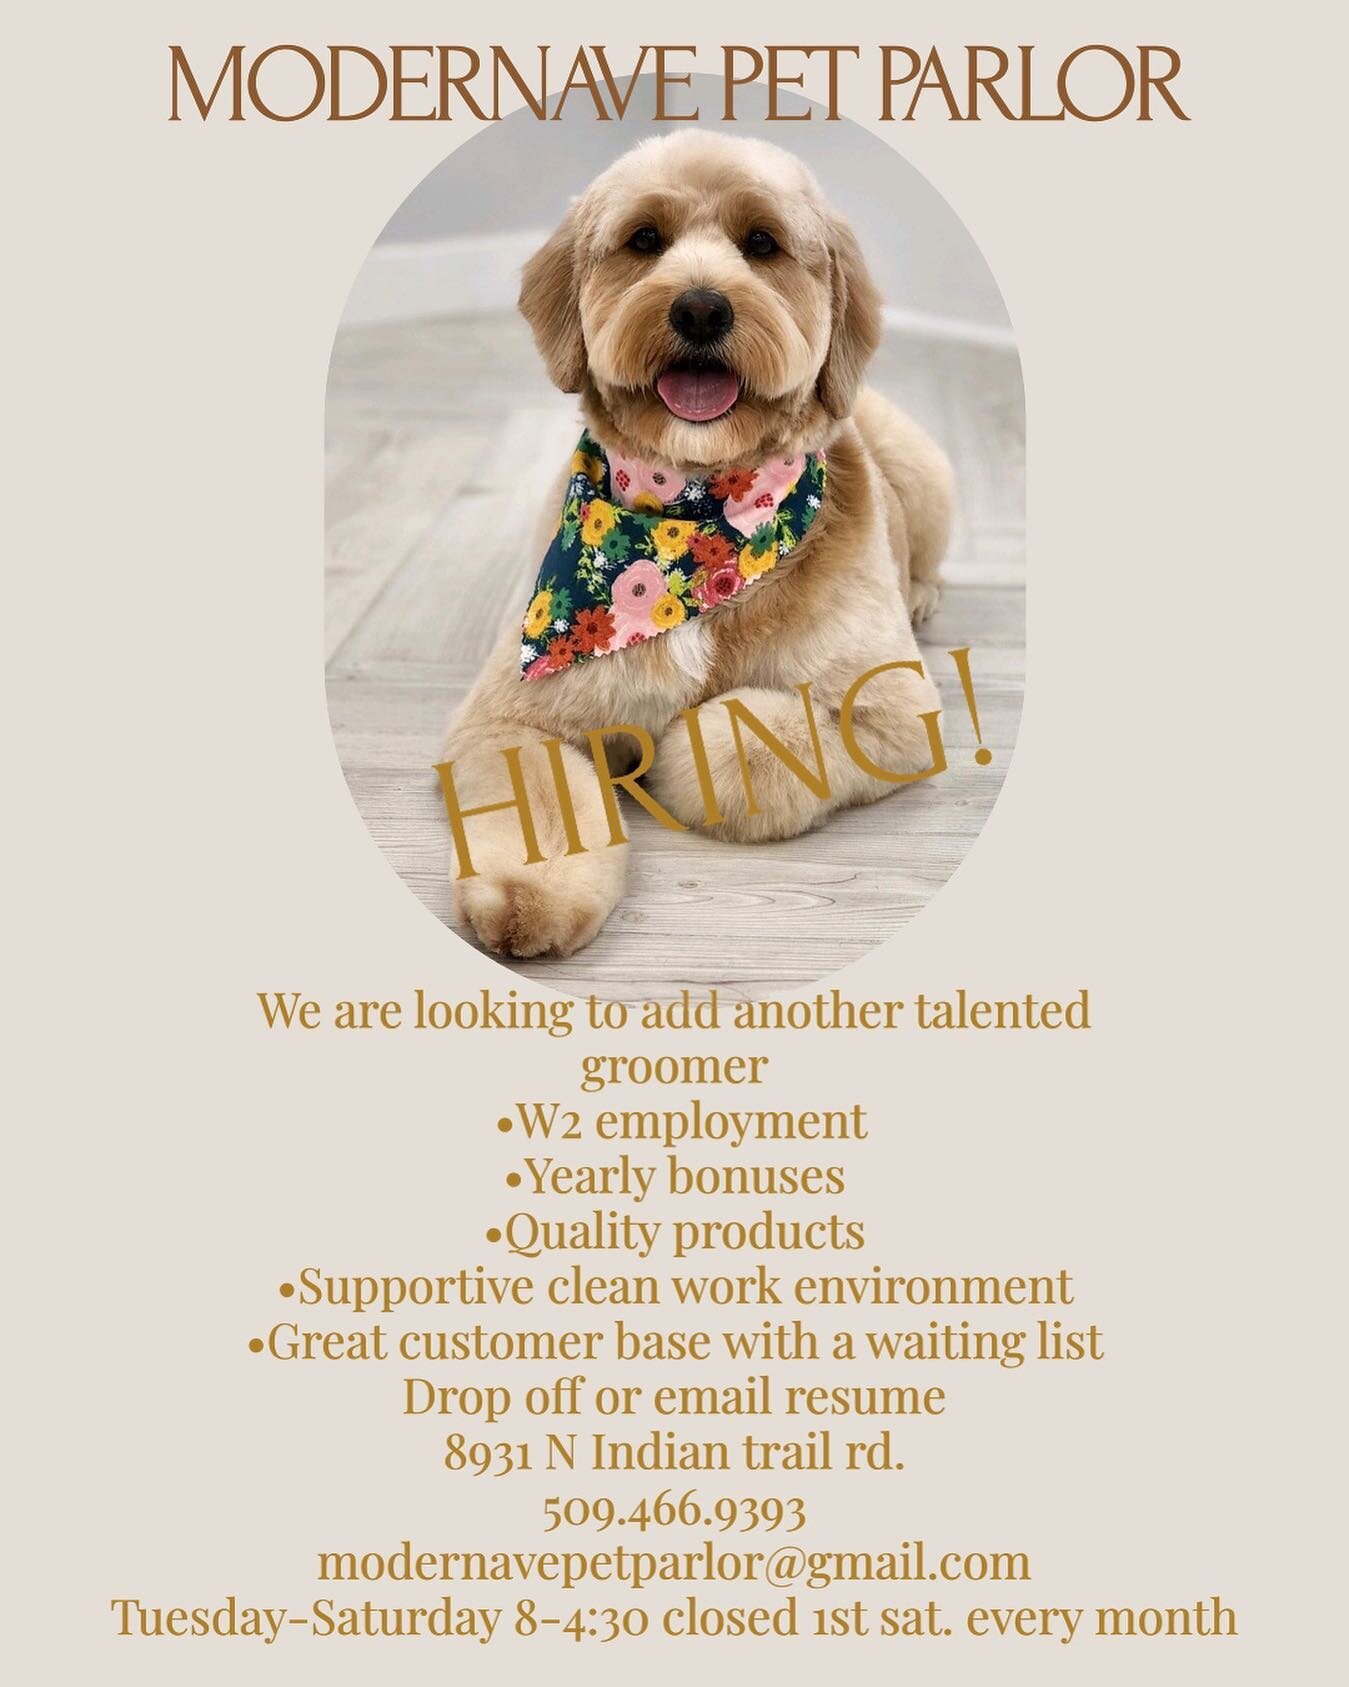 ❗️HIRING BONUS❗️We are hiring for a groomer!